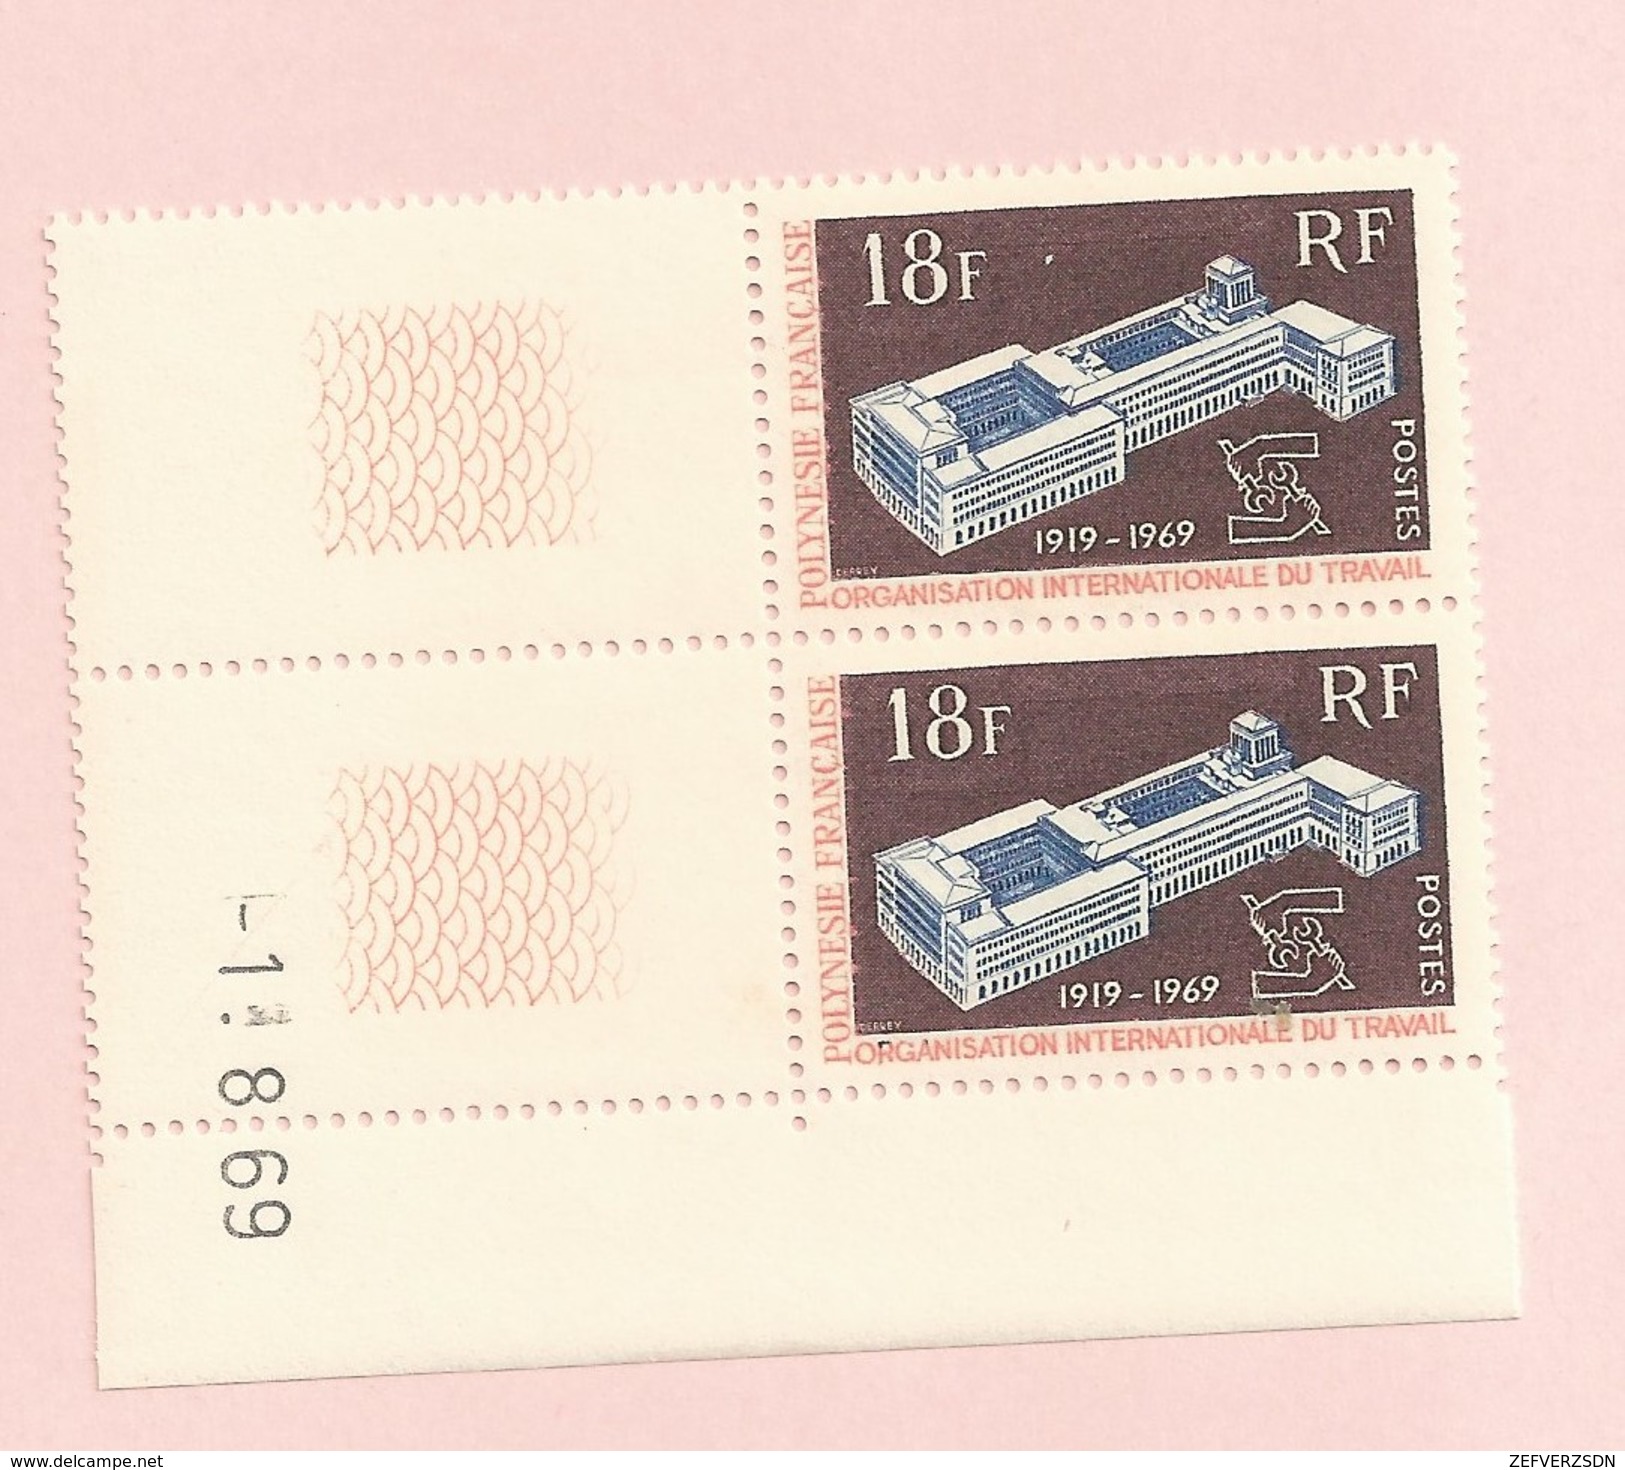 ORGANISATION INTERNATIONALE DU TRAVAIL BLOC COINS COIN DATES DATE POLYNESIE FRANCAISE - Unused Stamps